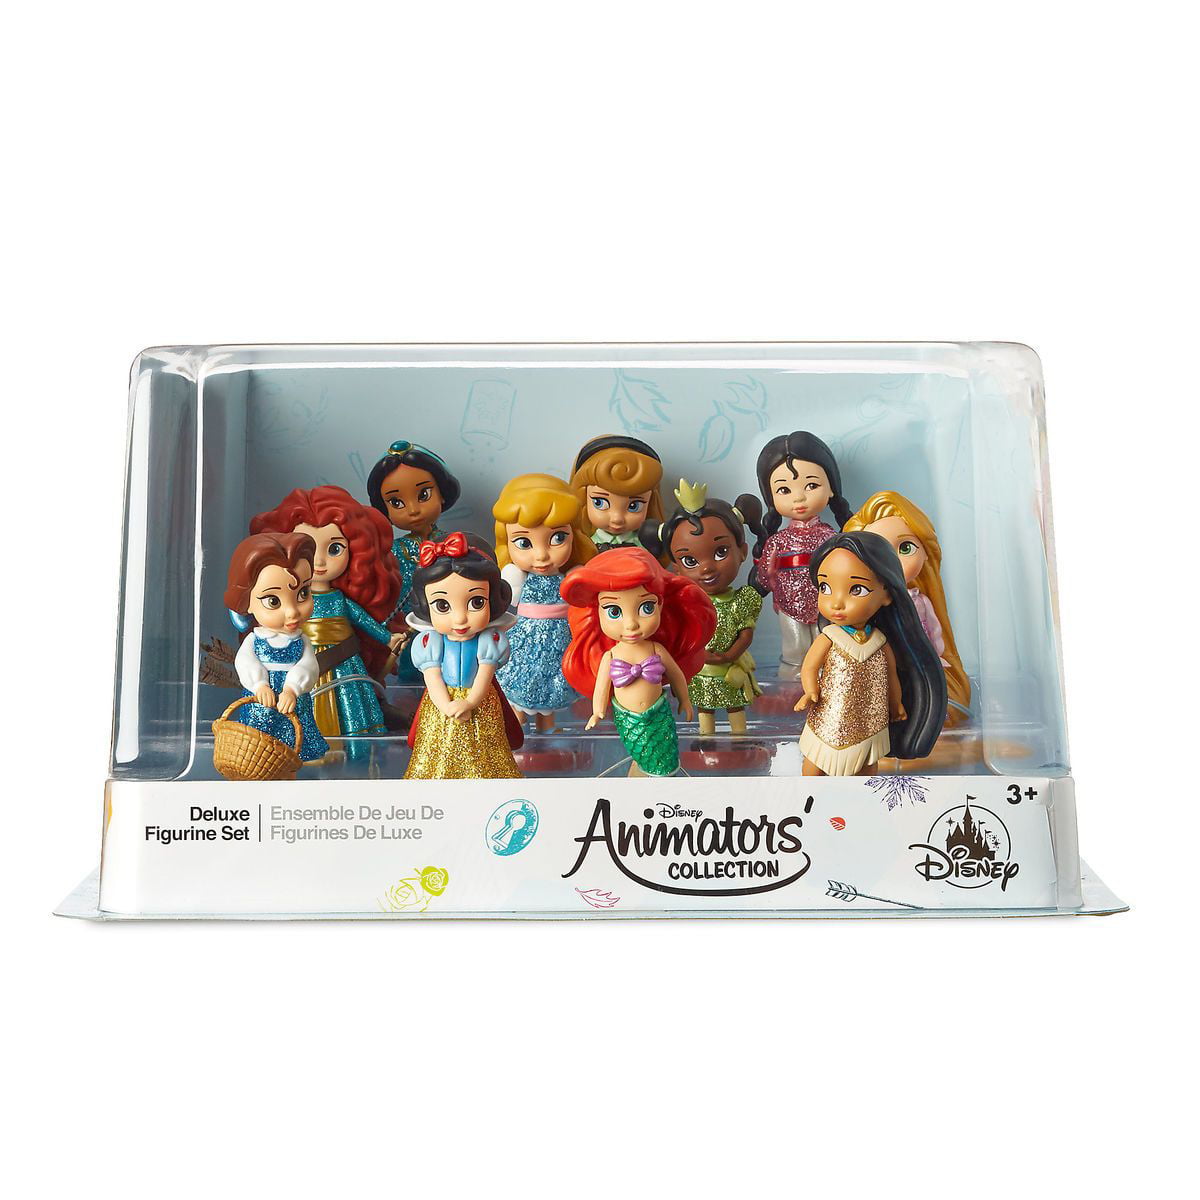 Disney Store Animators' Collection Deluxe PVC Figure Playset Figurine Play Set 